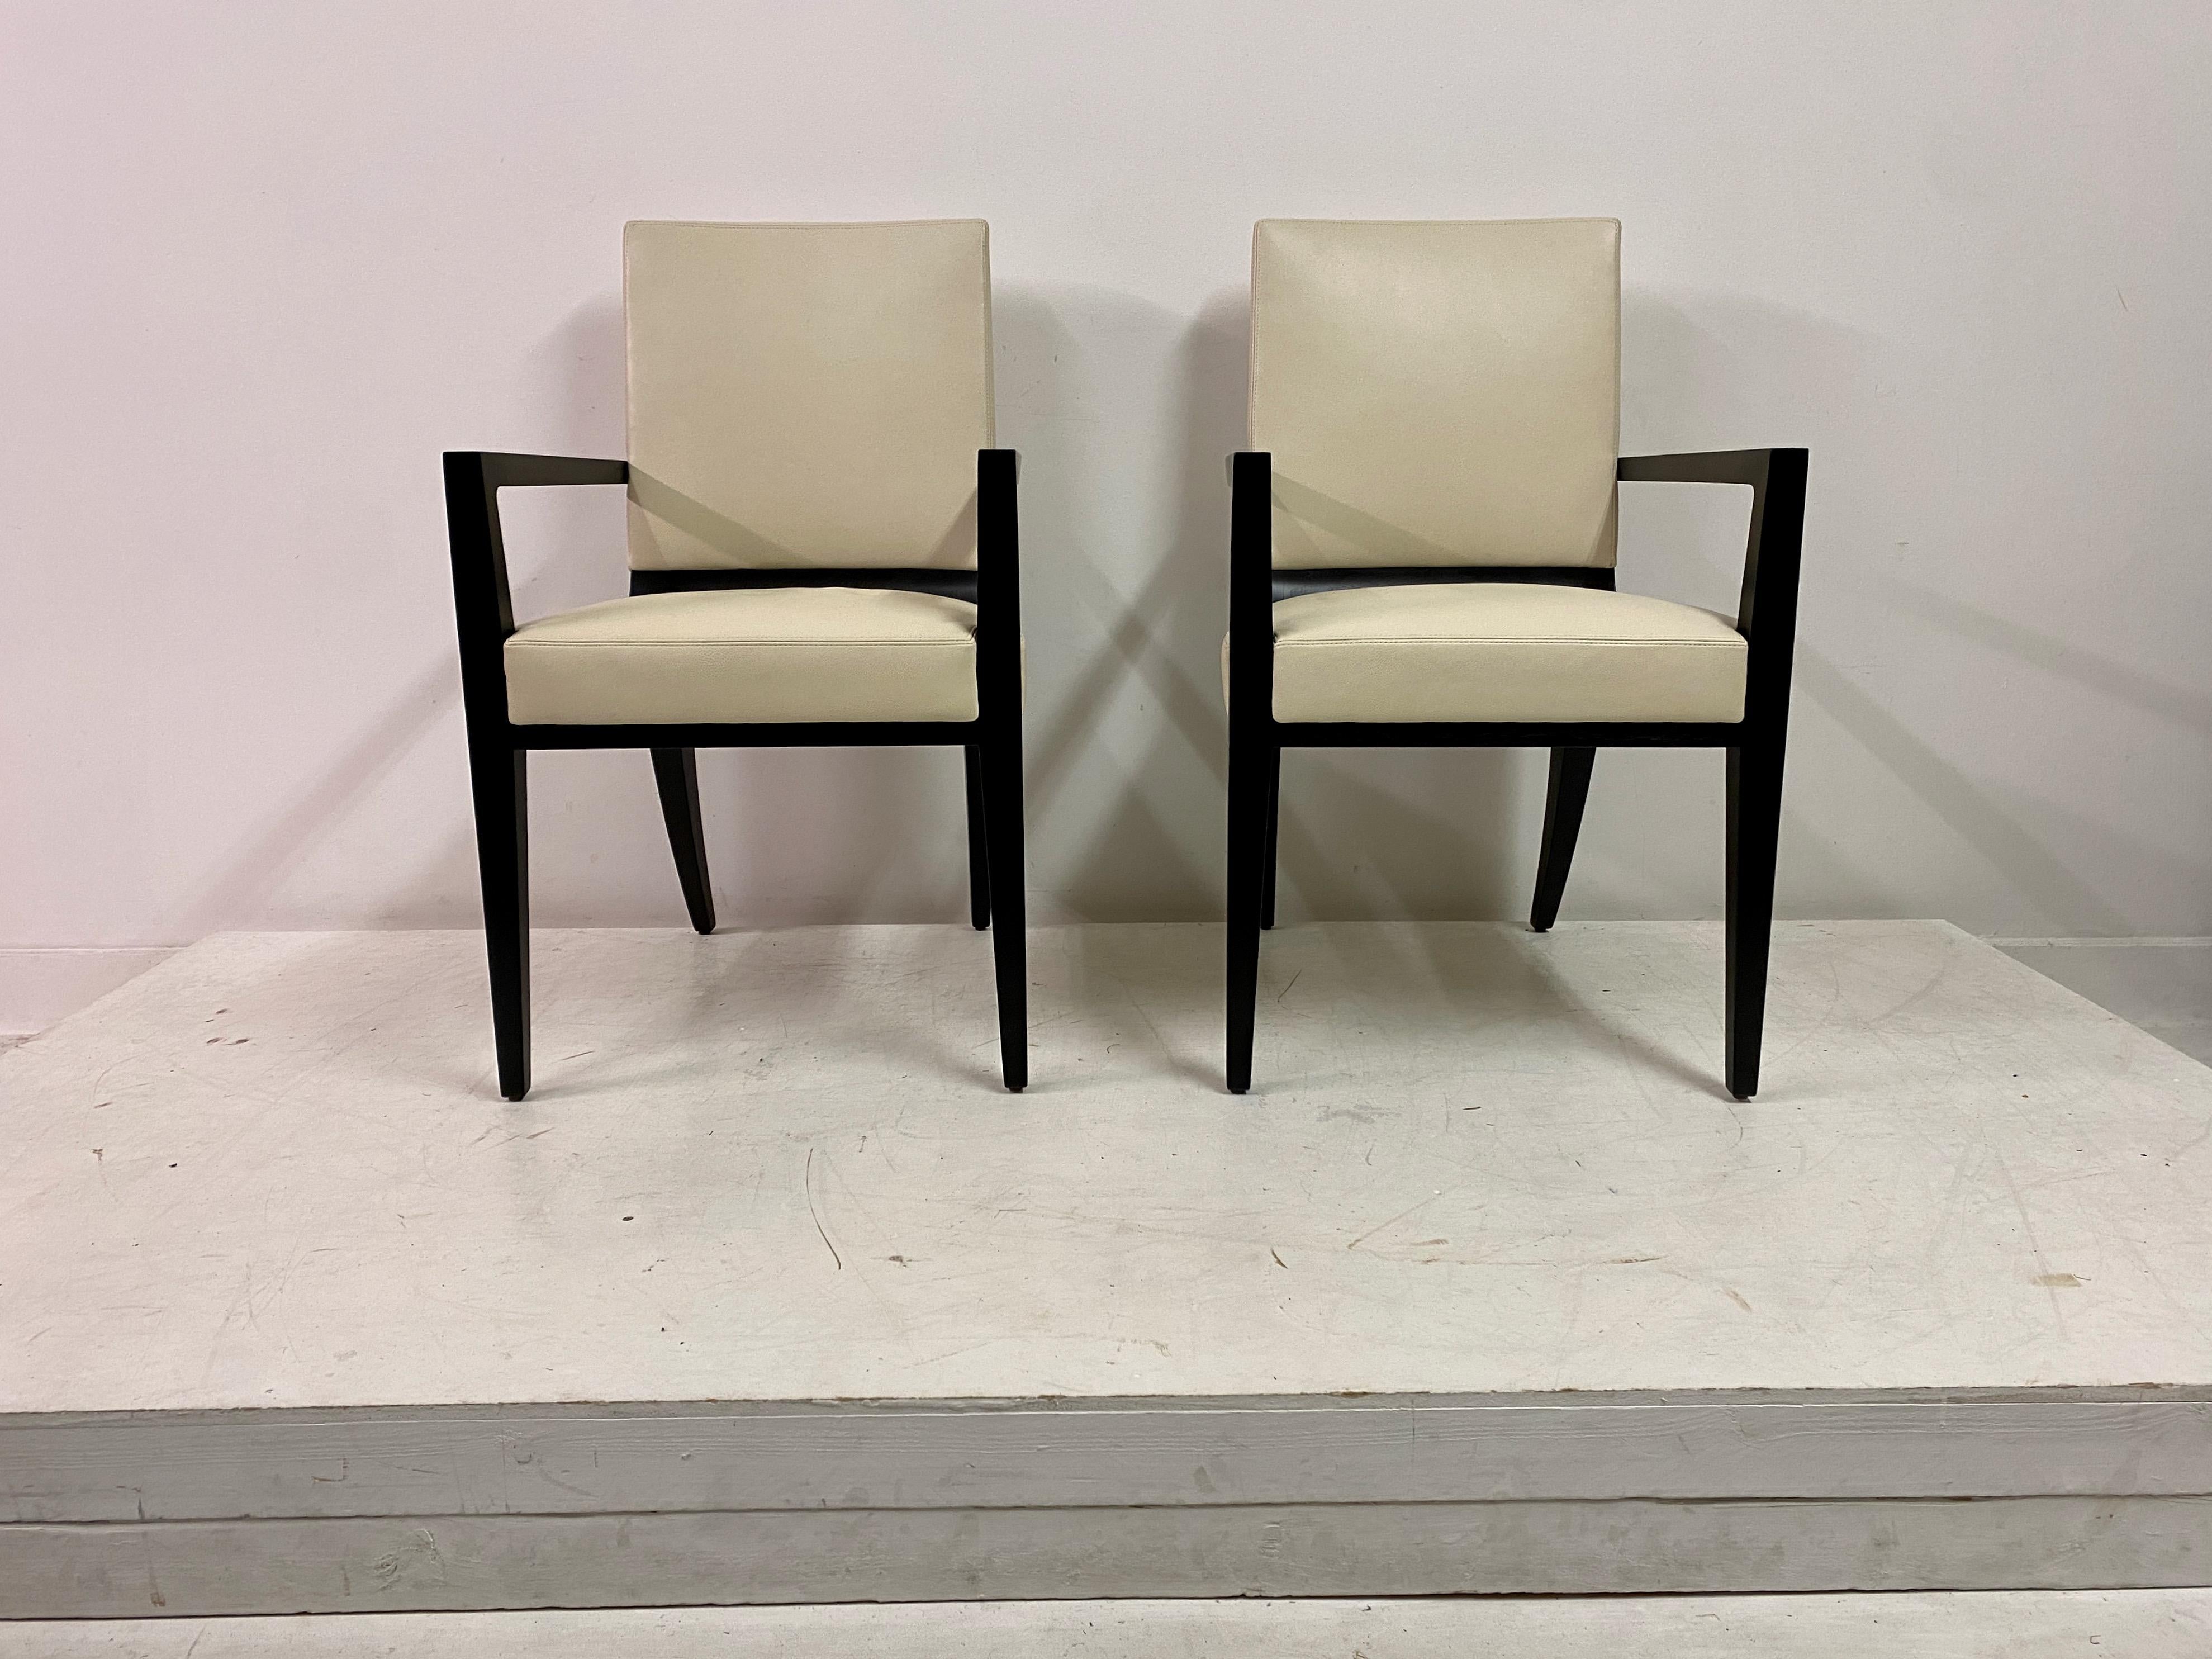 Pair of armchairs

Harris model

By Joseph Jeup

Contemporary USA